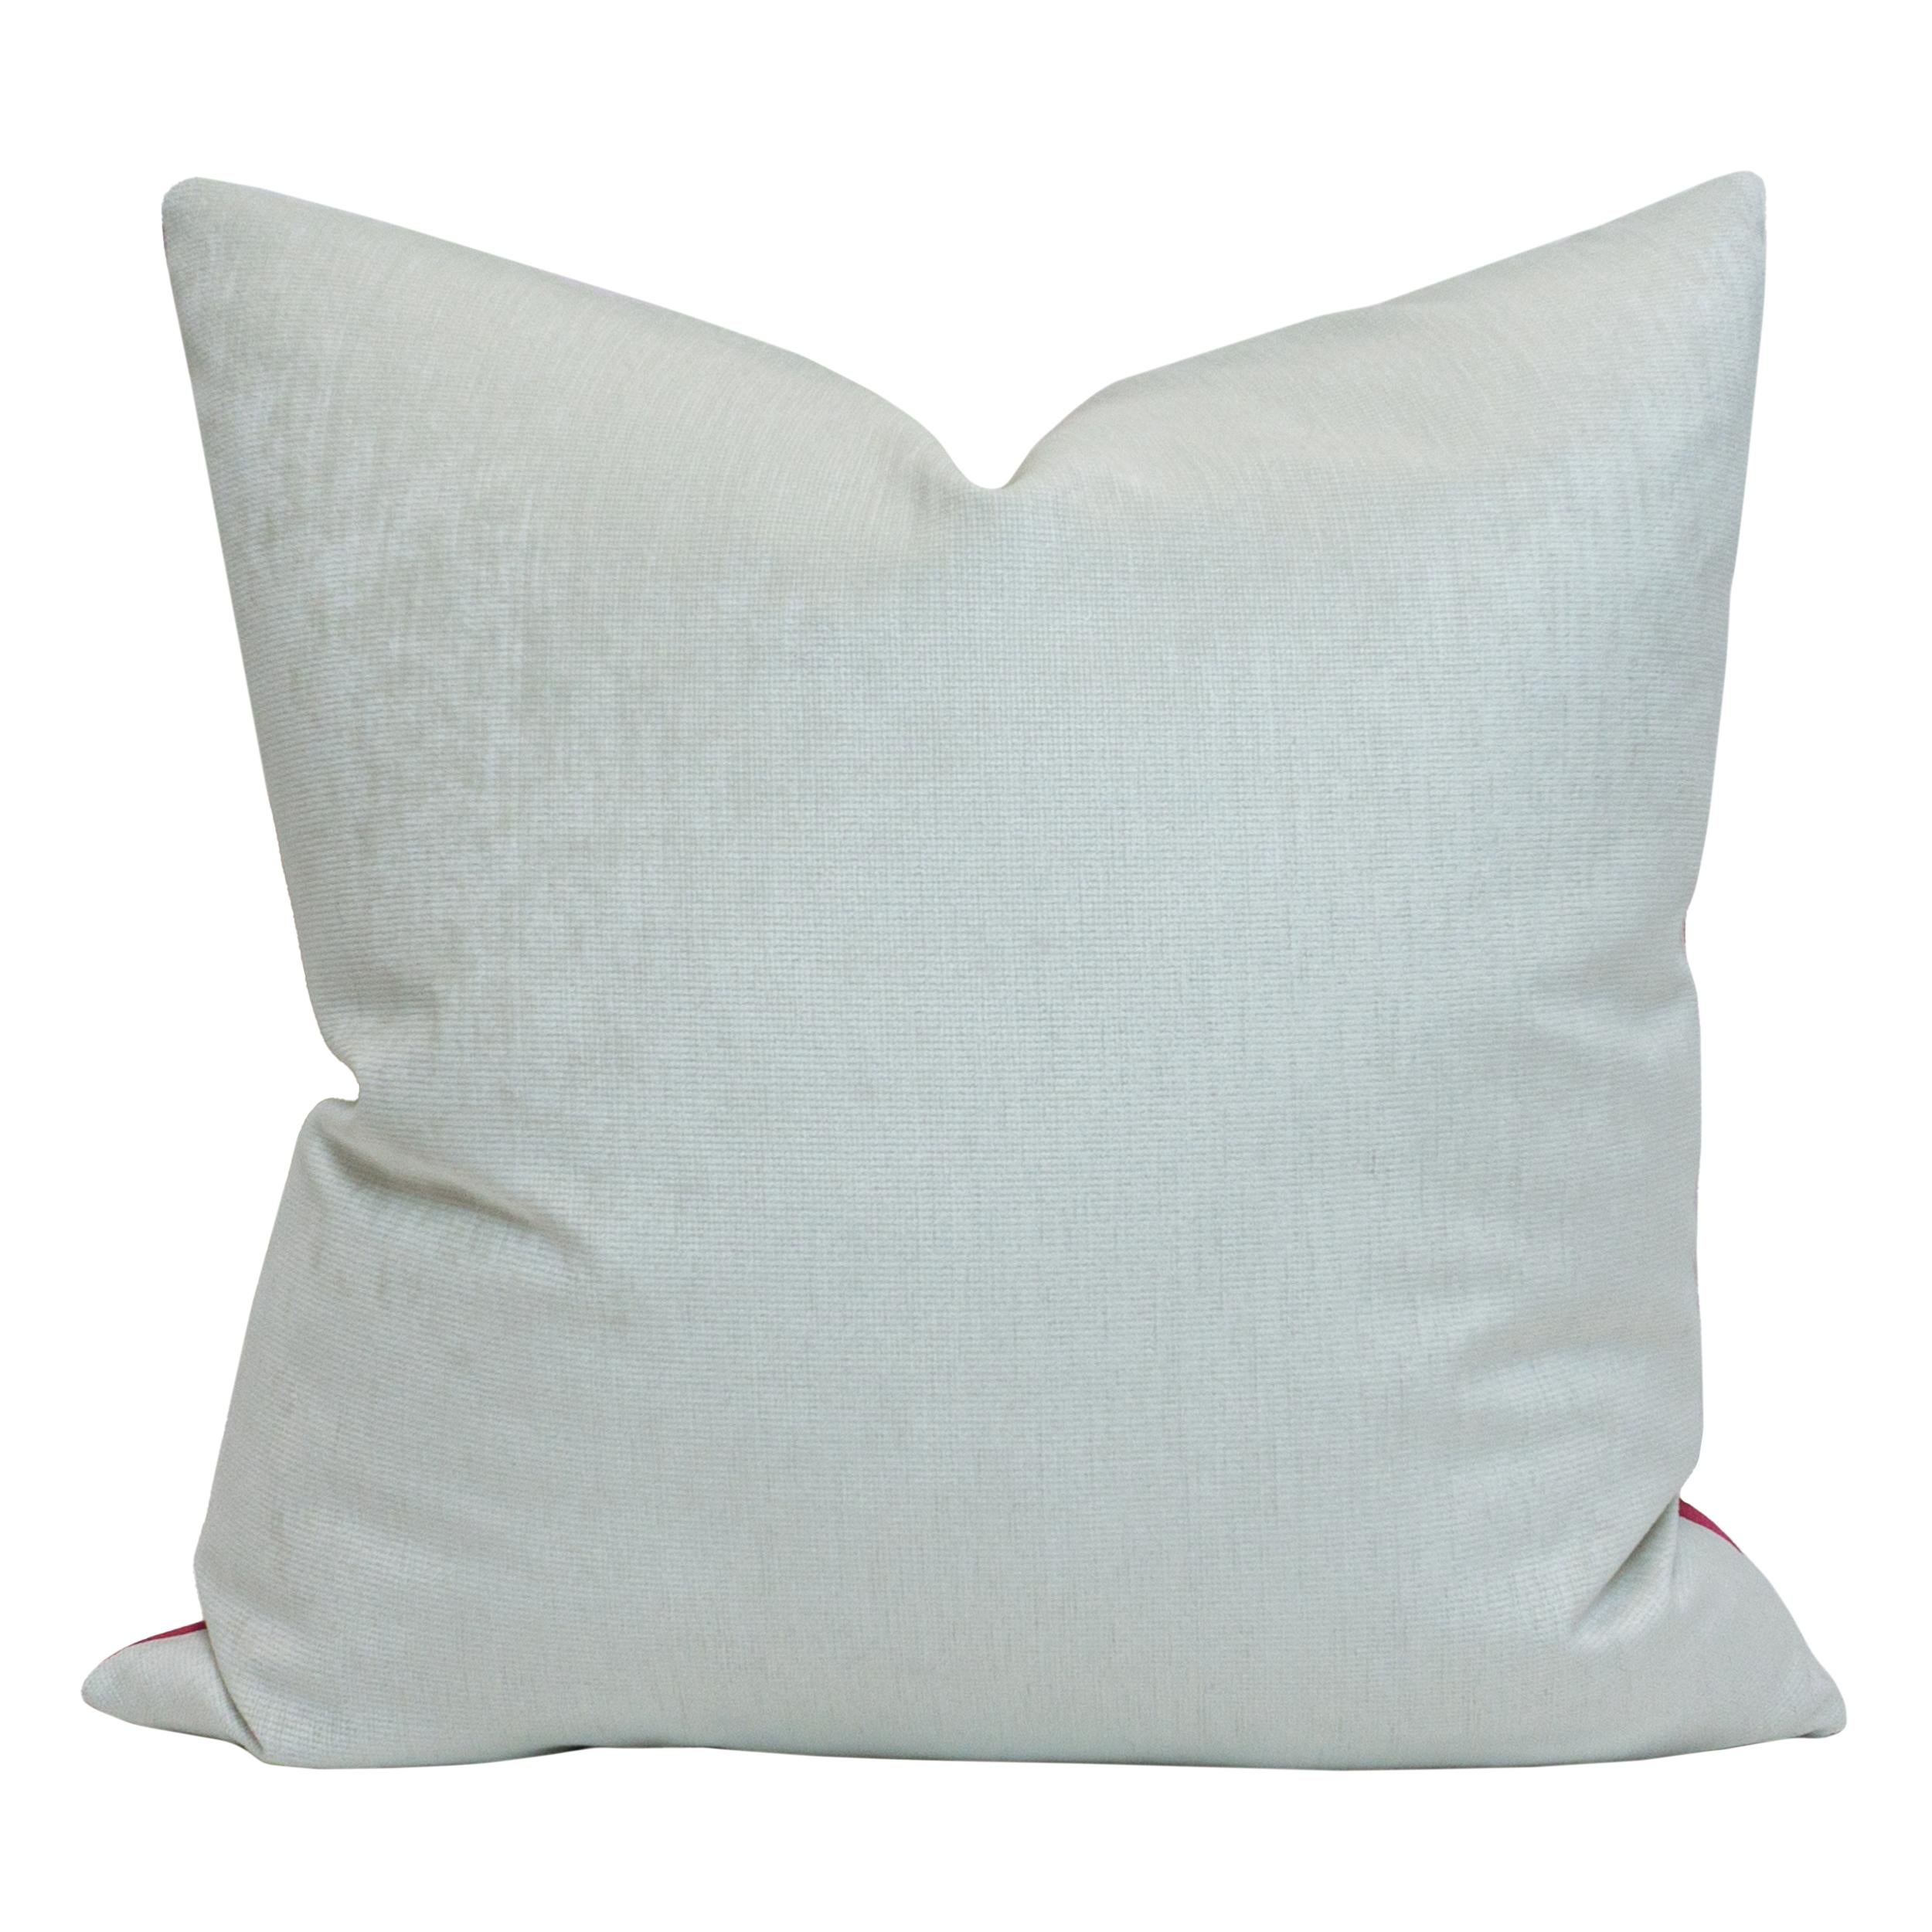 American Pink Stripe Tie Dye Linen Square Pillows For Sale